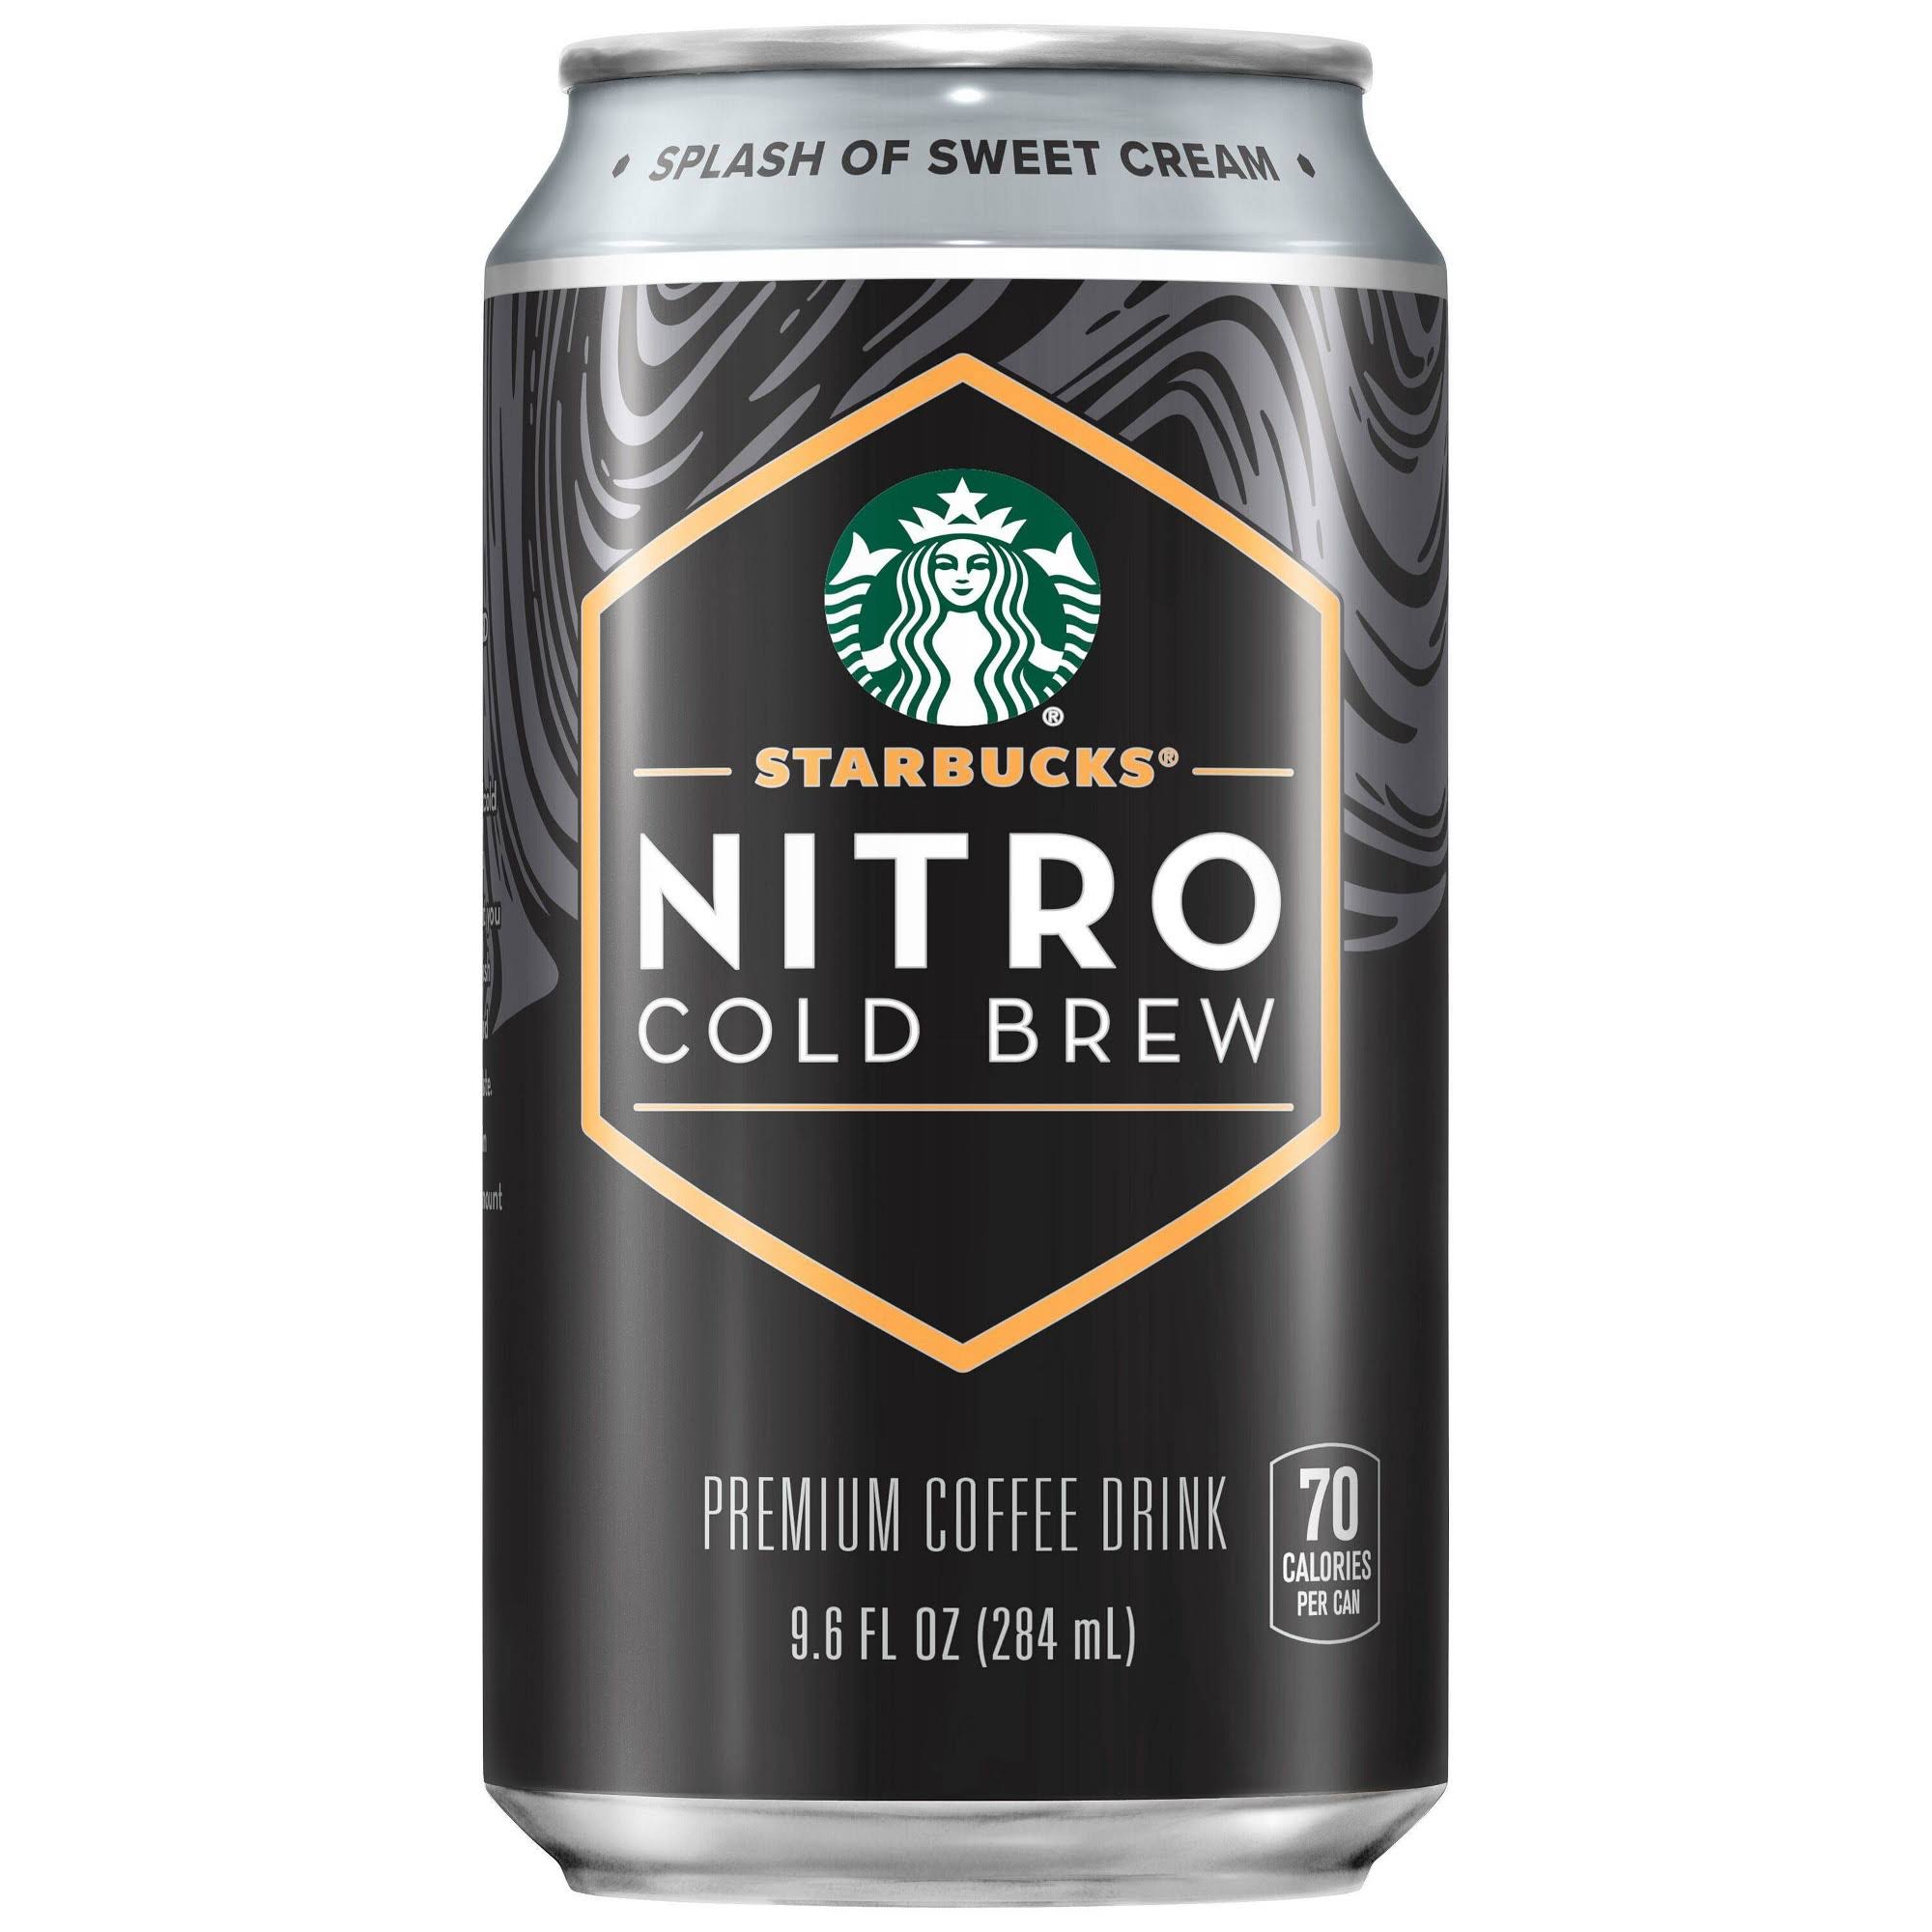 Starbucks Nitro Coffee Drink, Premium, Cold Brew - 9.6 fl oz